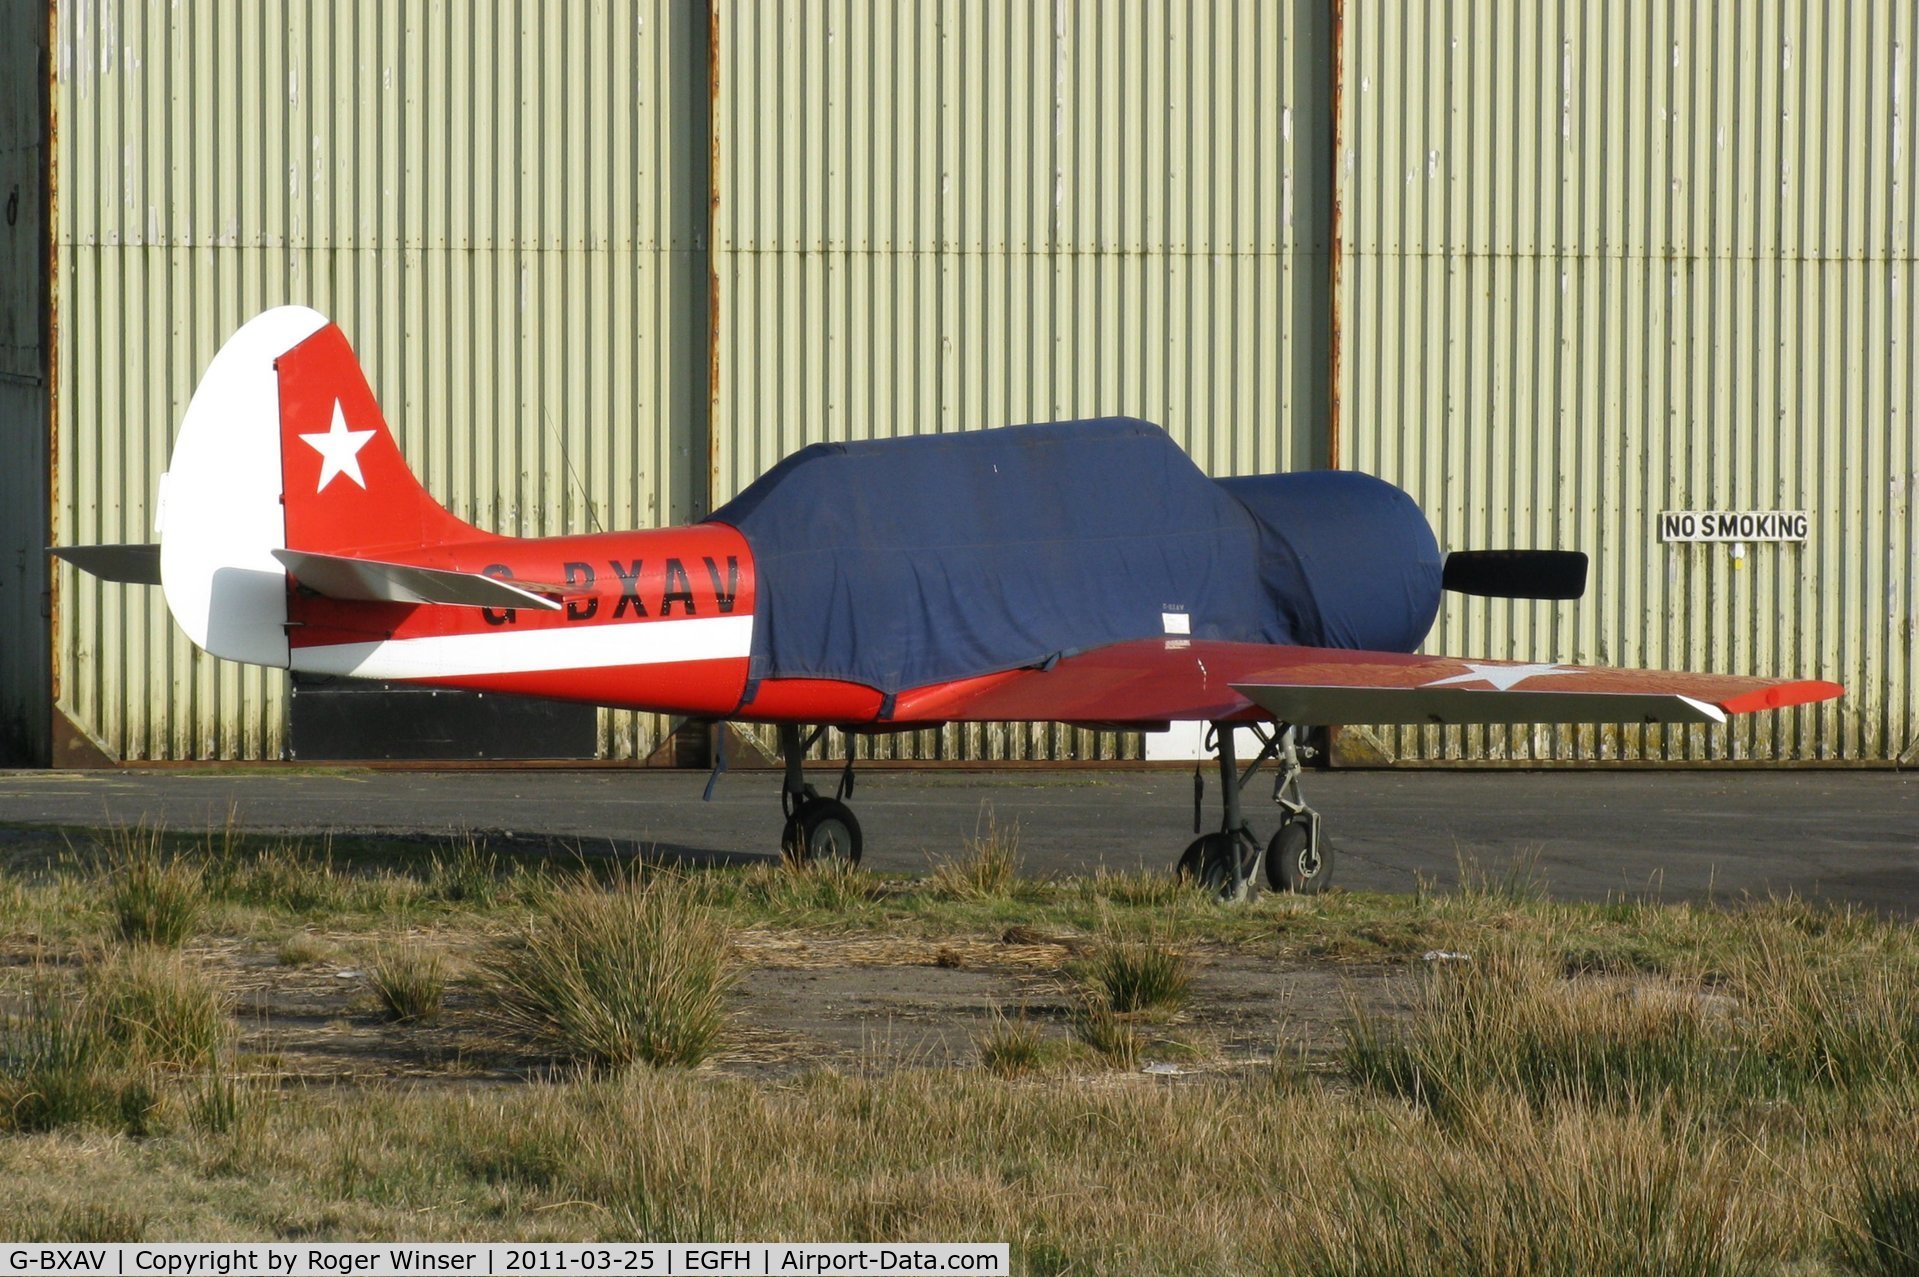 G-BXAV, 1991 Yakovlev (Aerostar) Yak-52 C/N 9111608, At Swansea Airport. Re-registered G-SPUT on 18 June 2012.